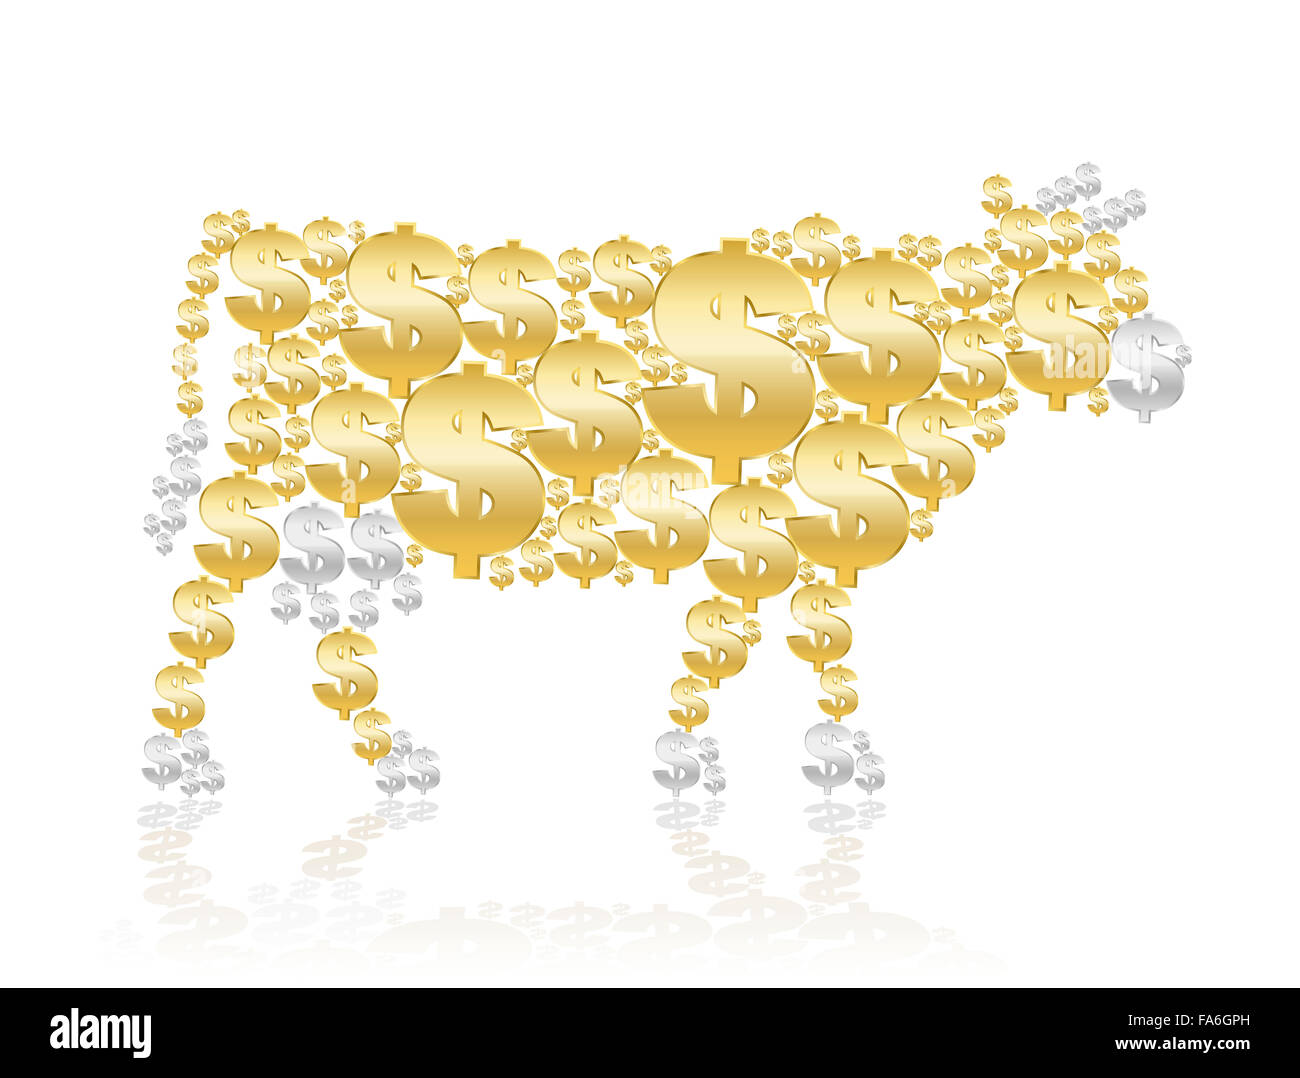 Mucca da mungere composta di golden e silver dollar simboli. Foto Stock